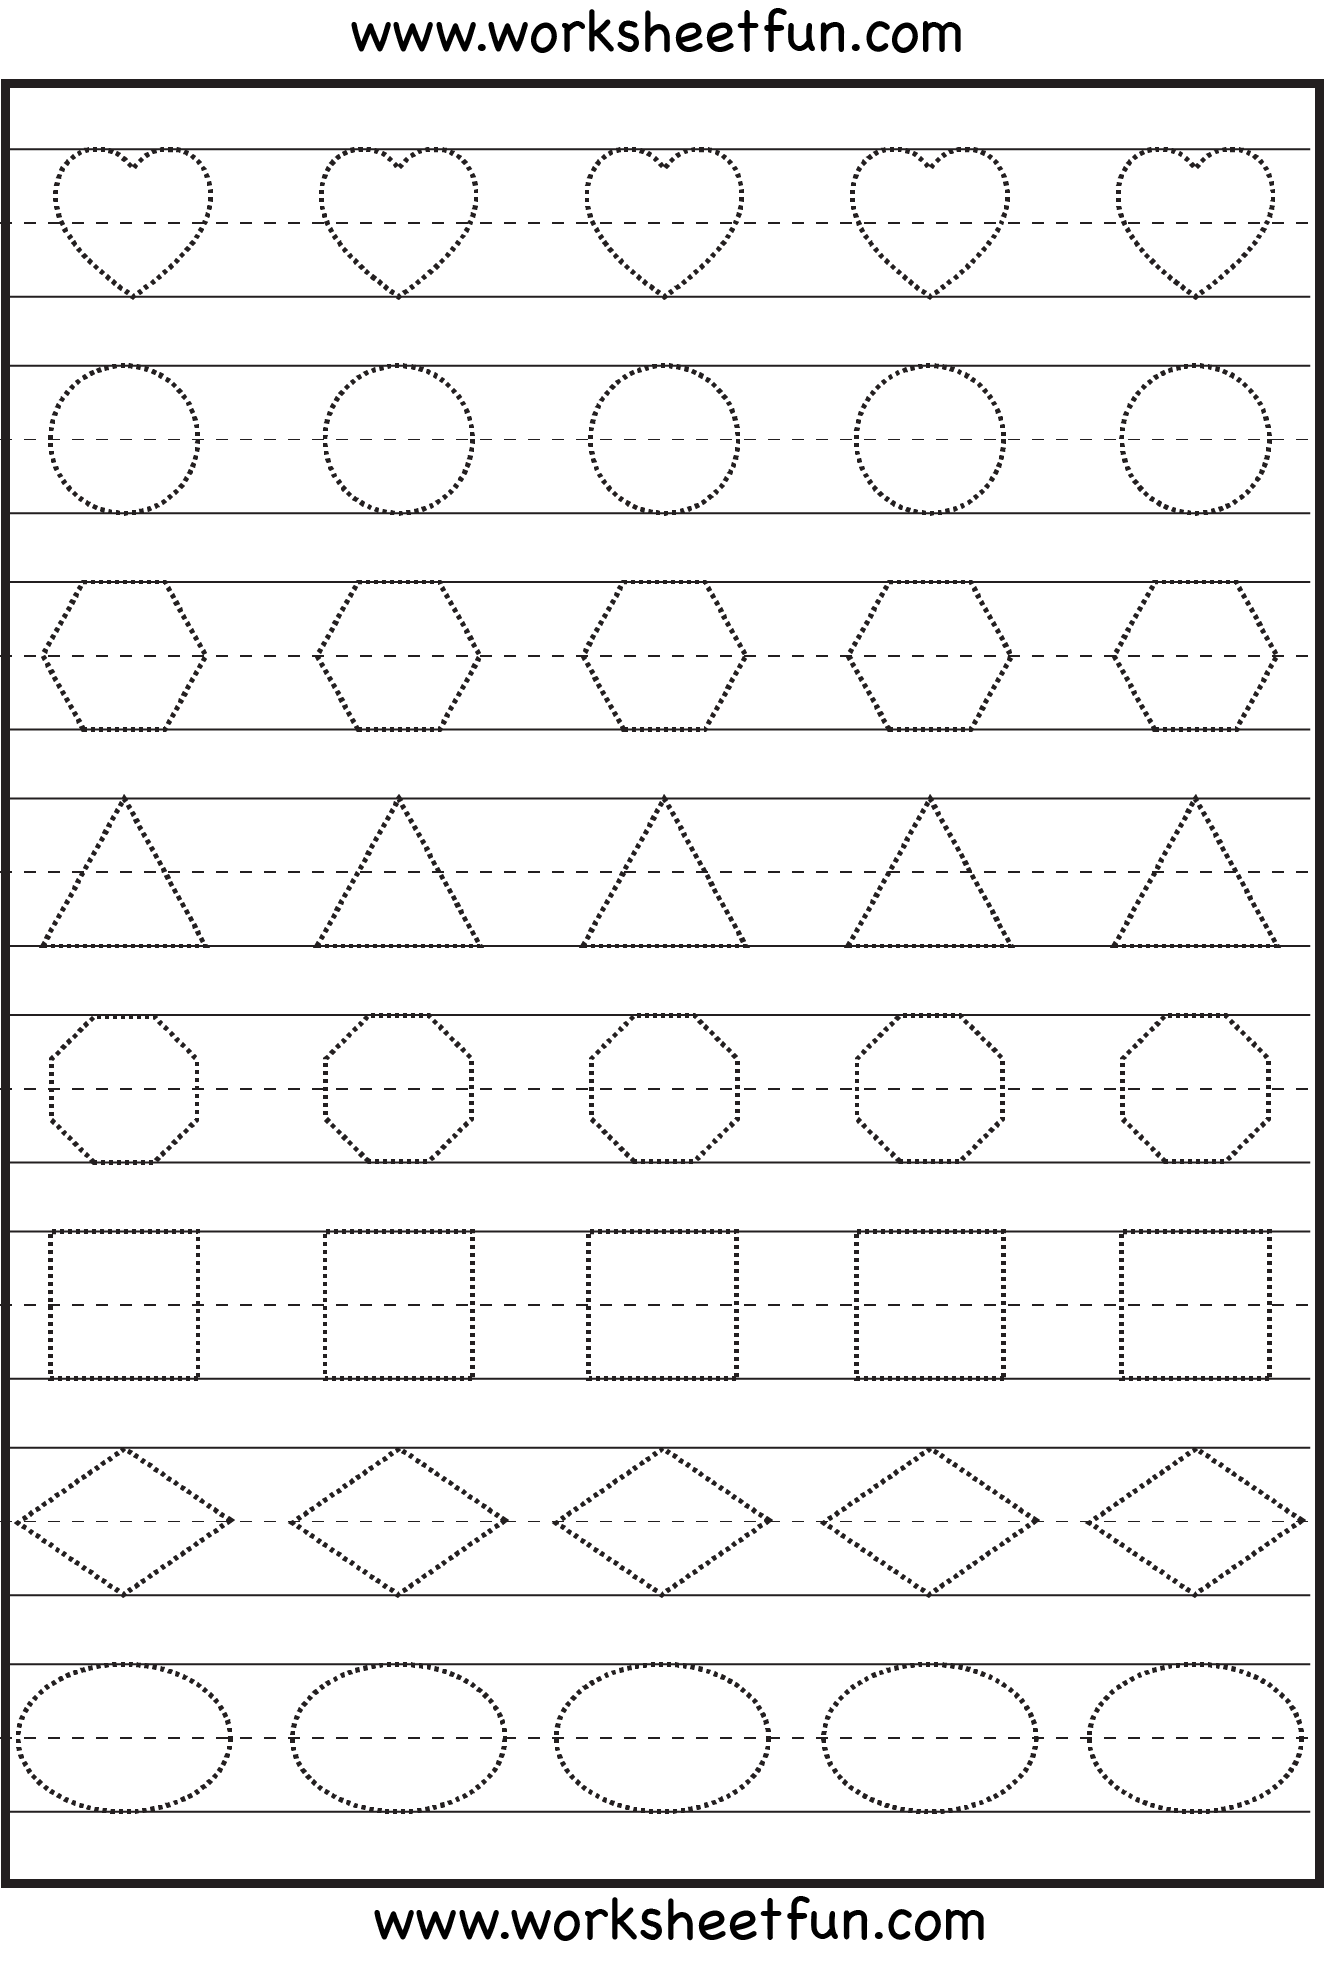 printable-preschool-worksheets-lexias-blog-free-printable-preschool